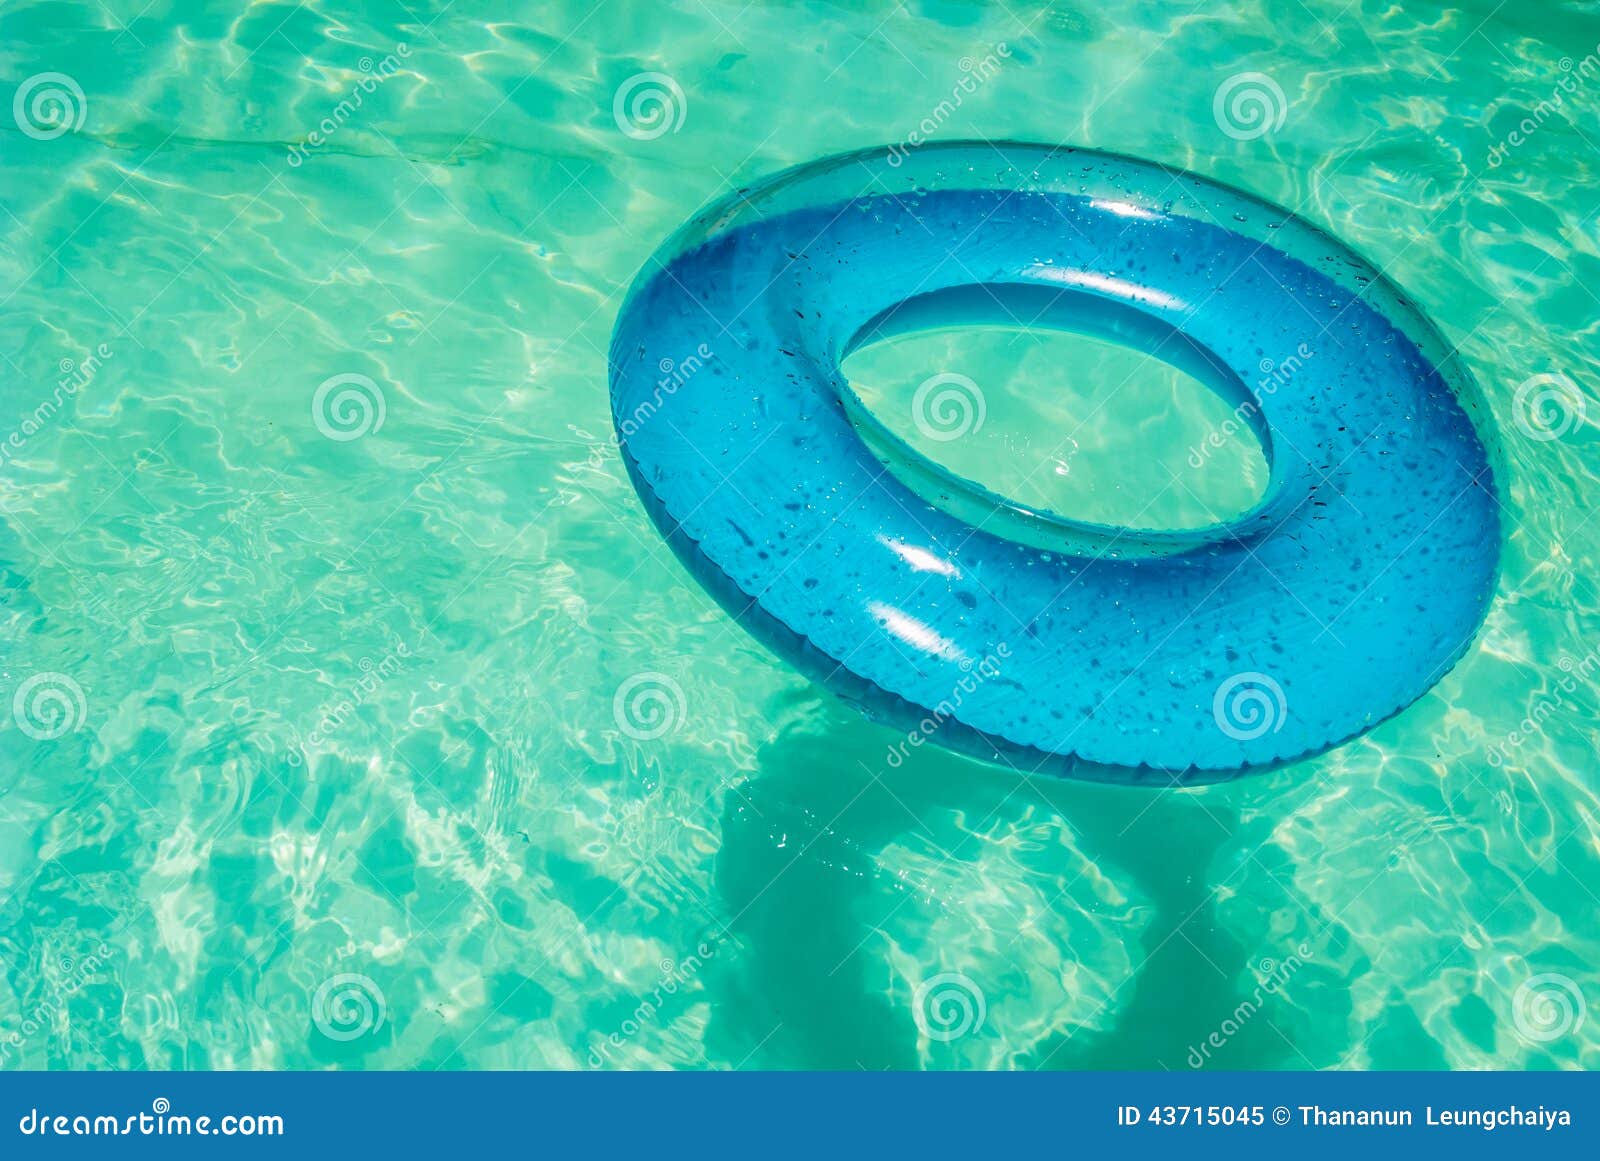 Inner Tube In Swimming Pool. Stock Photo - Image: 43715045